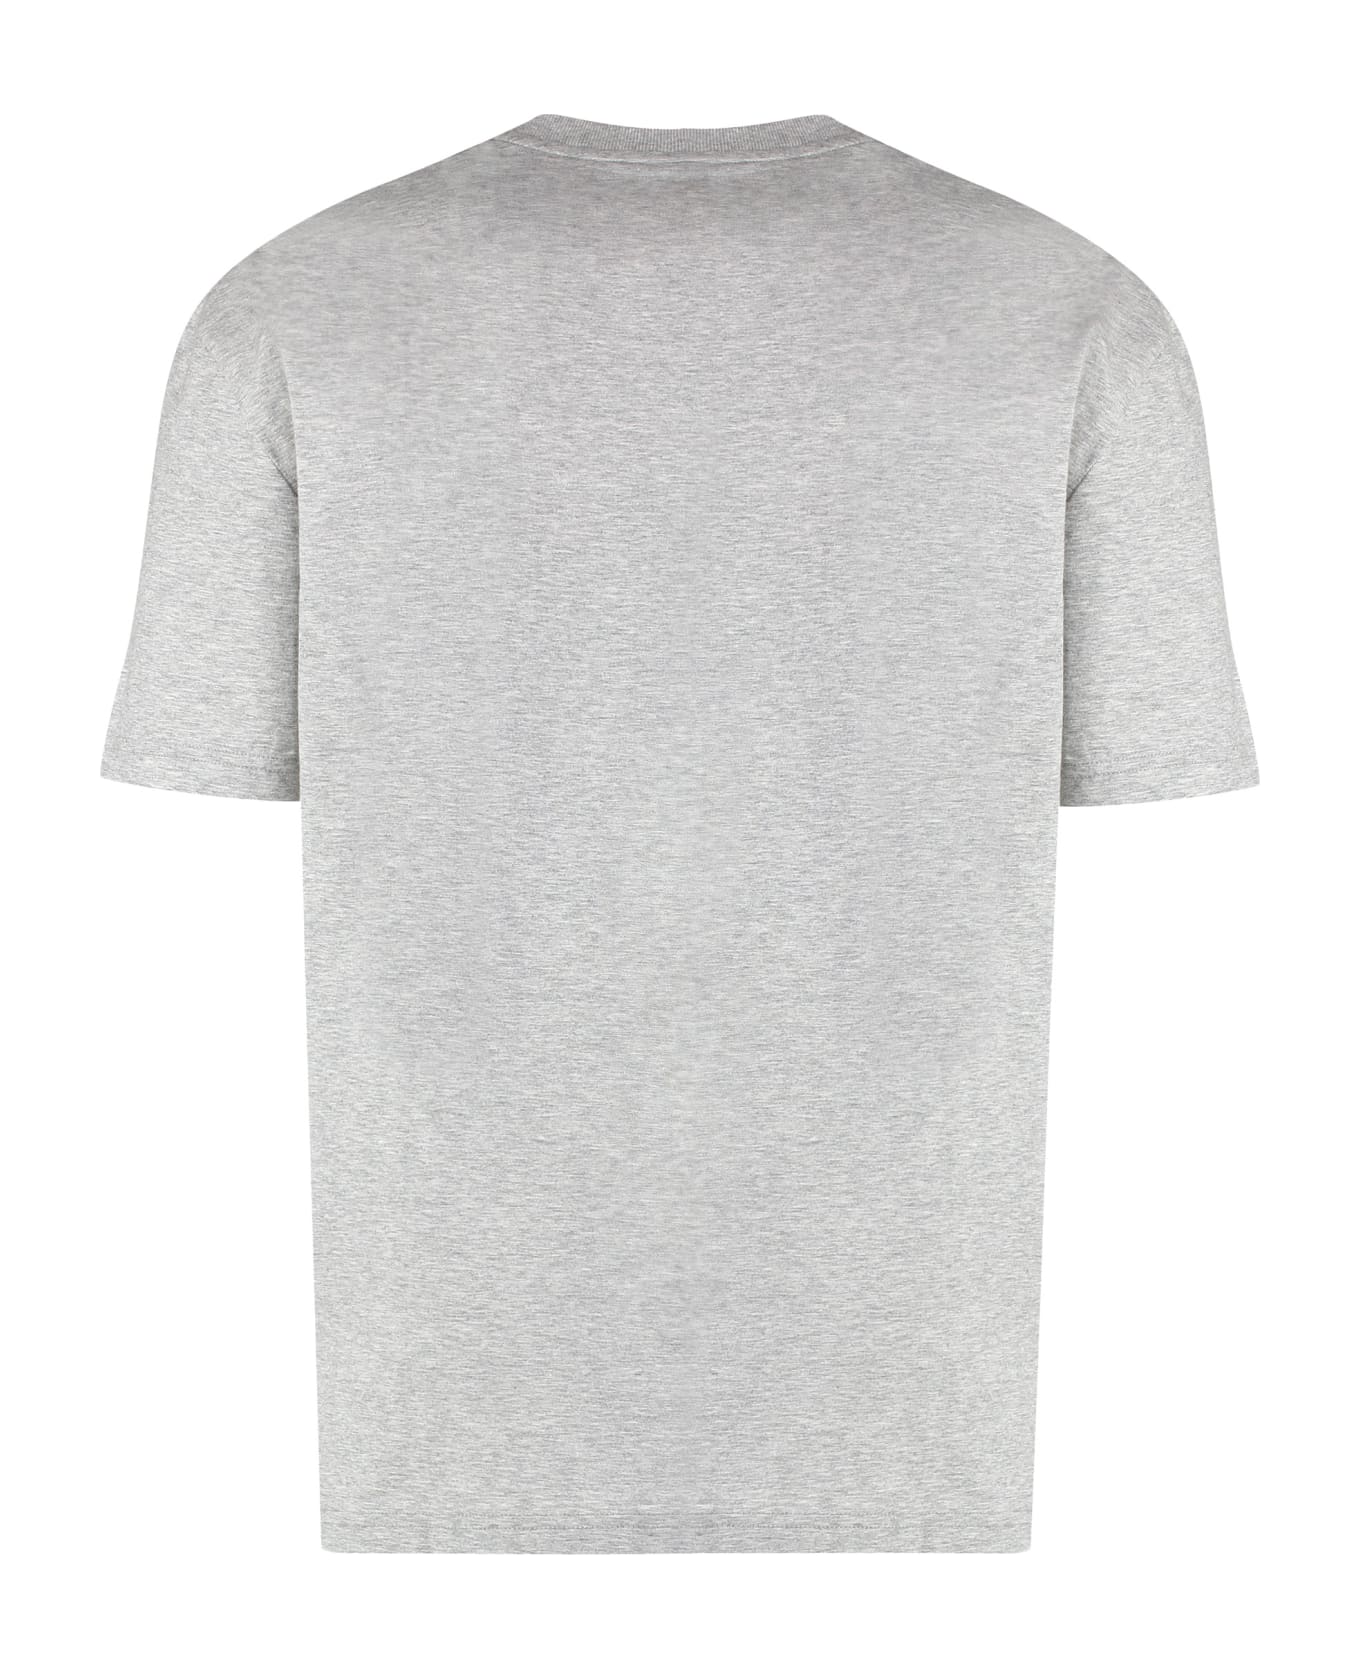 Hugo Boss Cotton Crew-neck T-shirt - grey シャツ